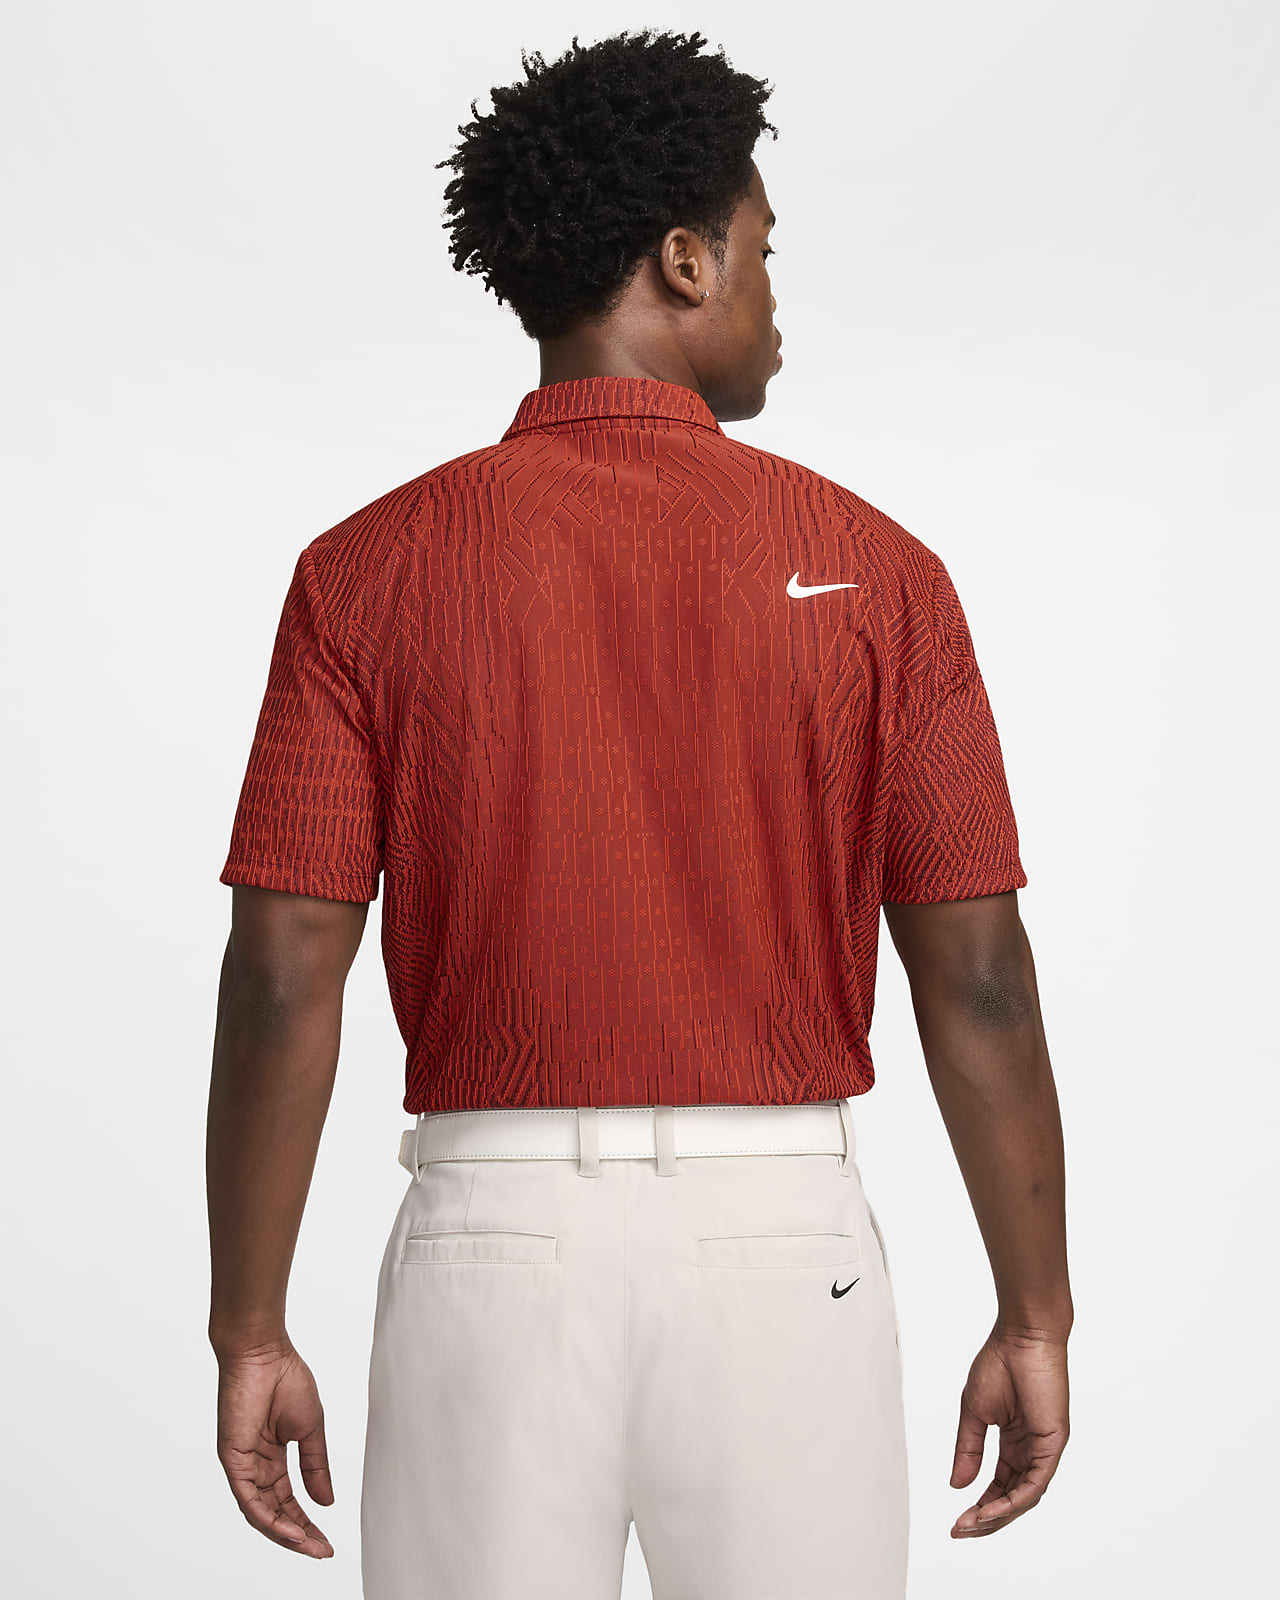 Nike Tour Men's Dri-FIT ADV Golf Polo